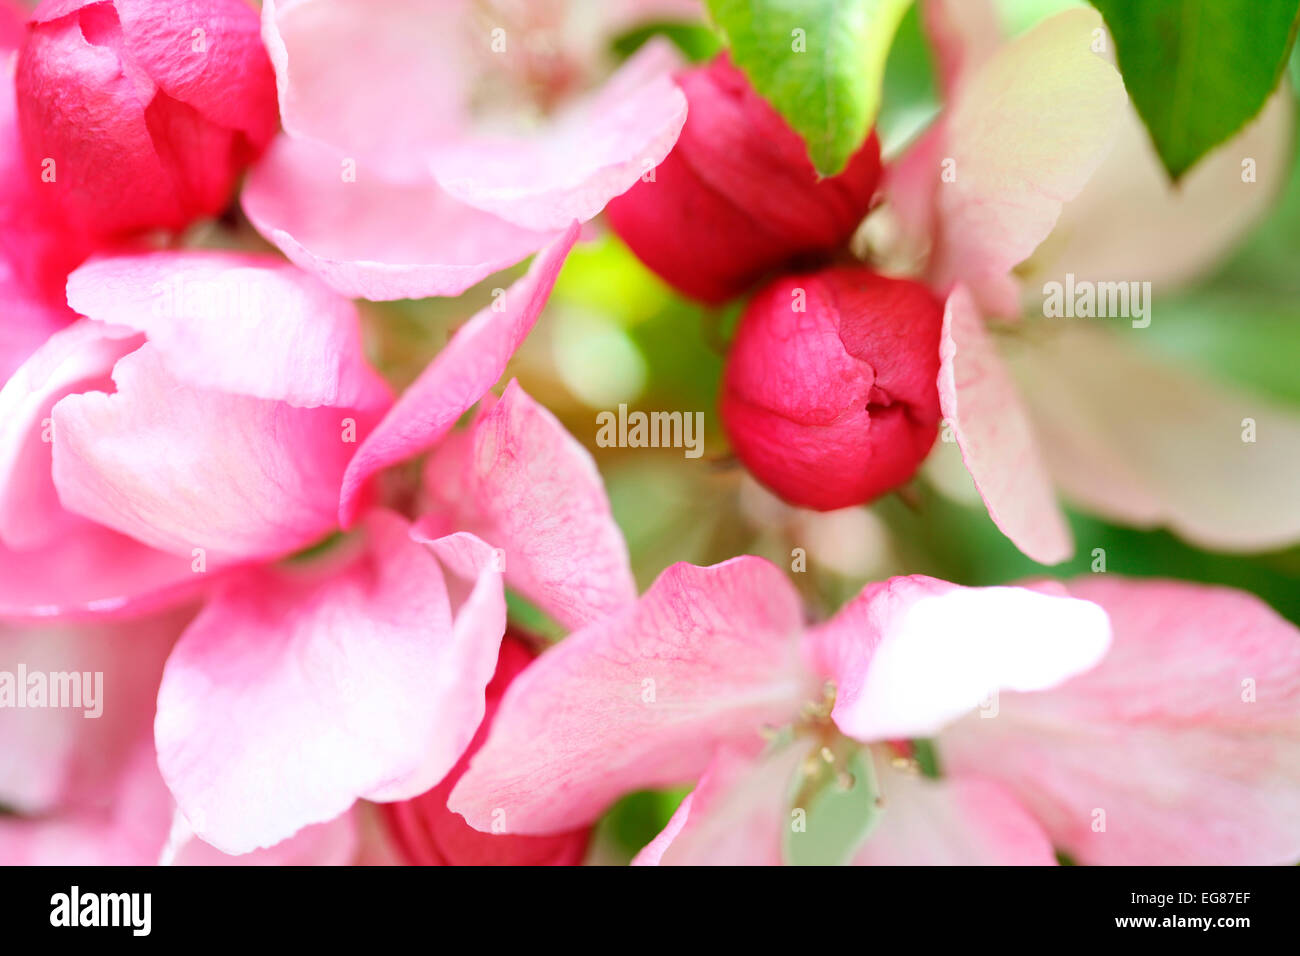 Delightful Image of Fragrant Cherry Blossom, Free Flowing and Abundant  Jane Ann Butler Photography JABP784 Stock Photo